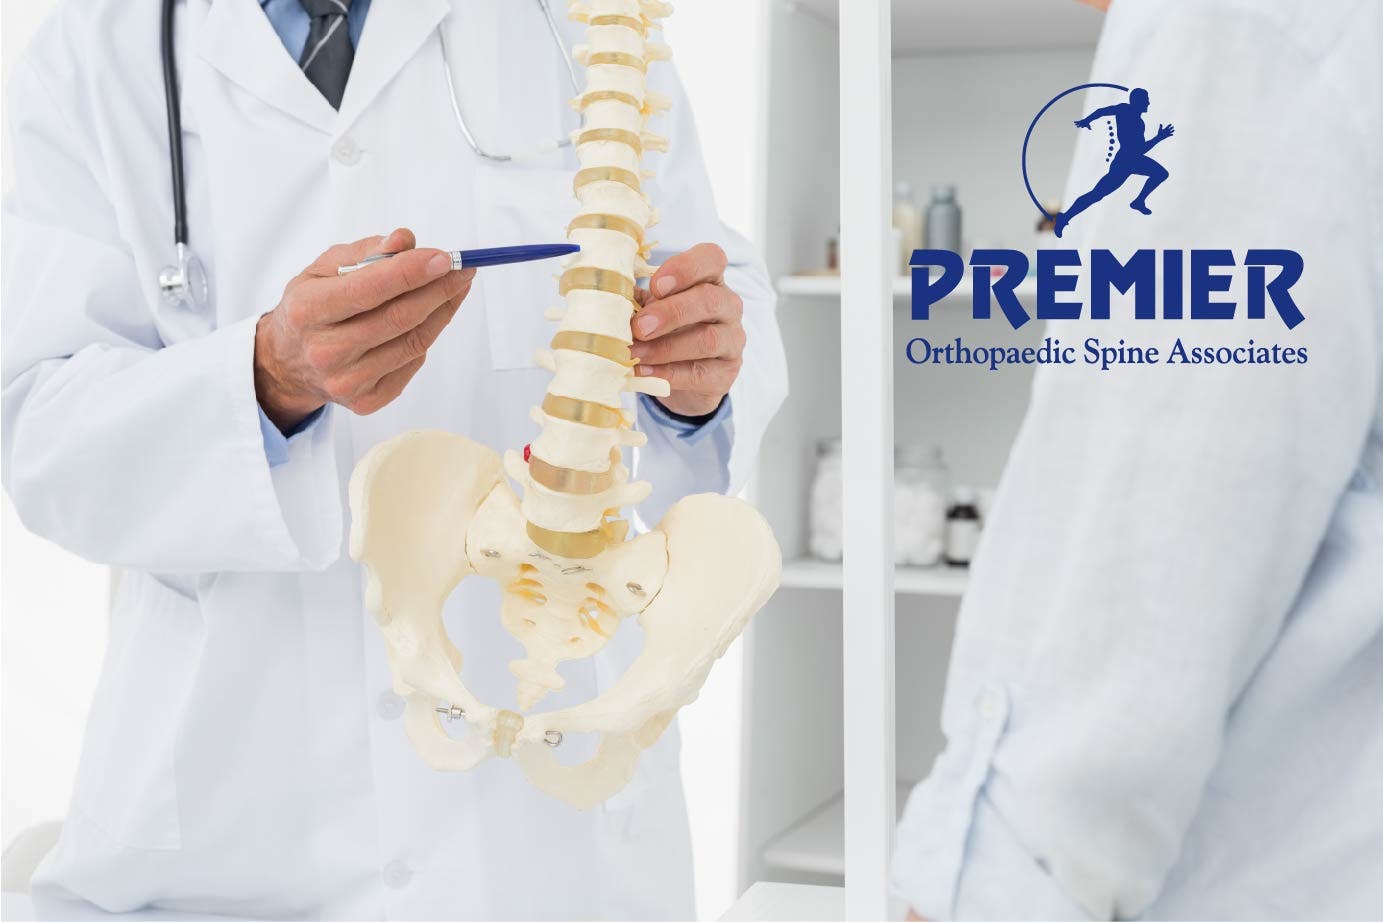 Premier Orthopedic Spine Associates